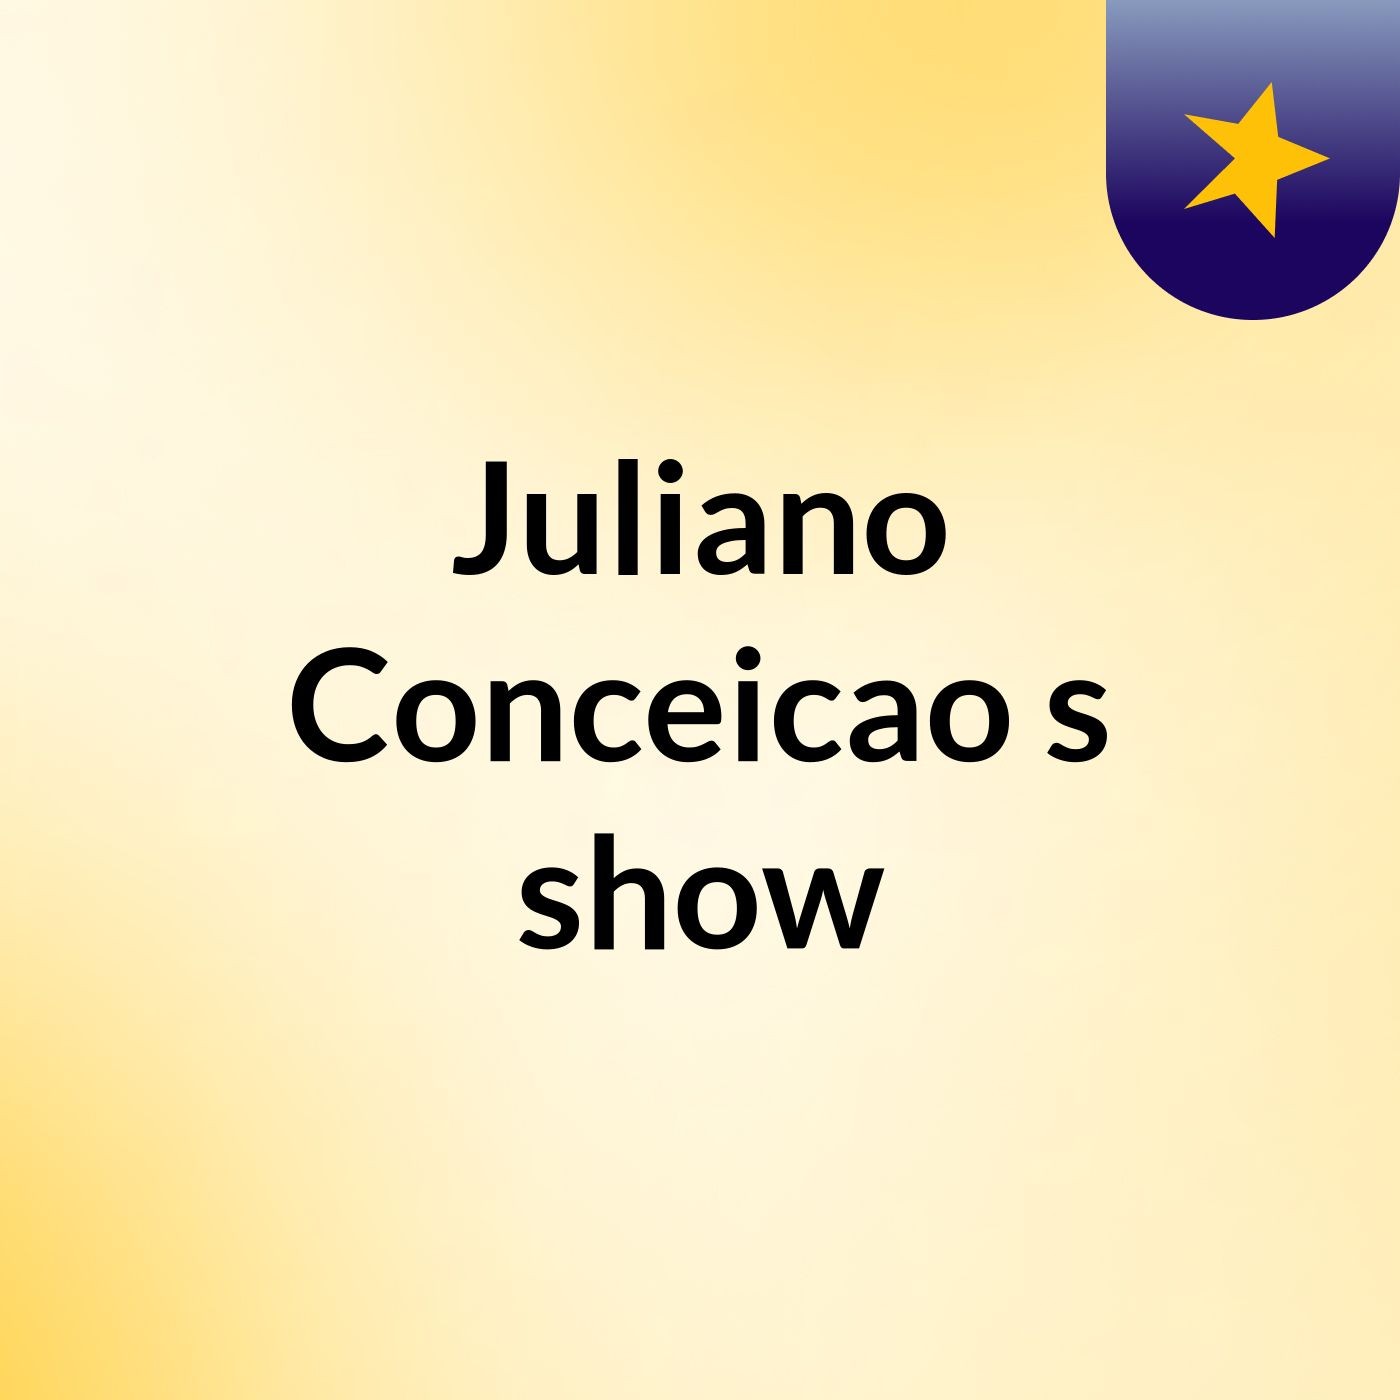 Juliano Conceicao's show